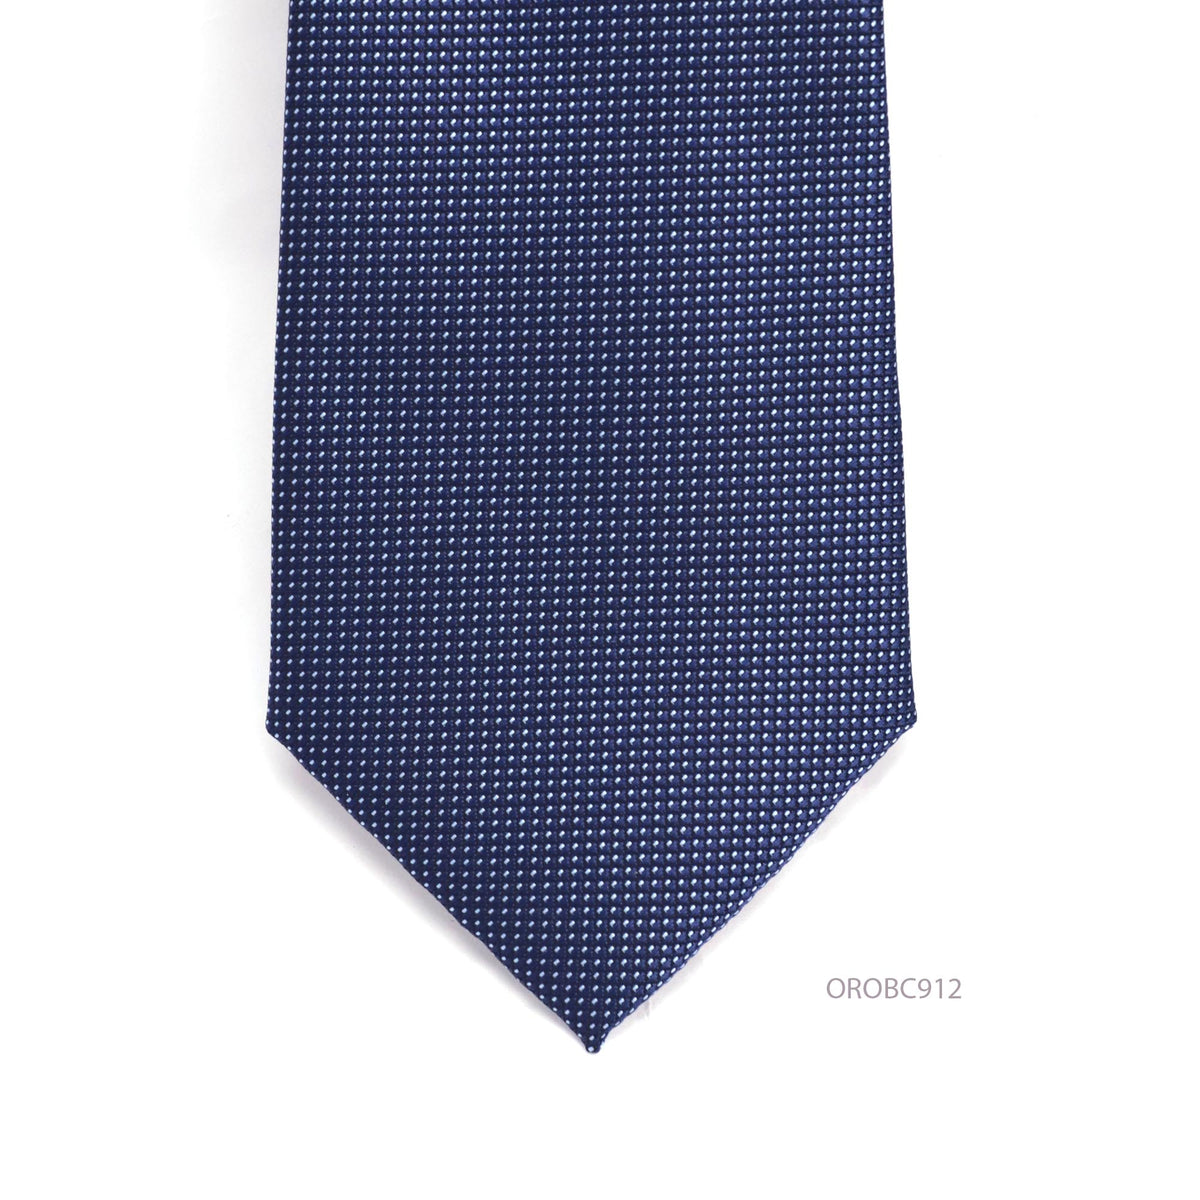 Dark Blue with little white dot Woven Tie